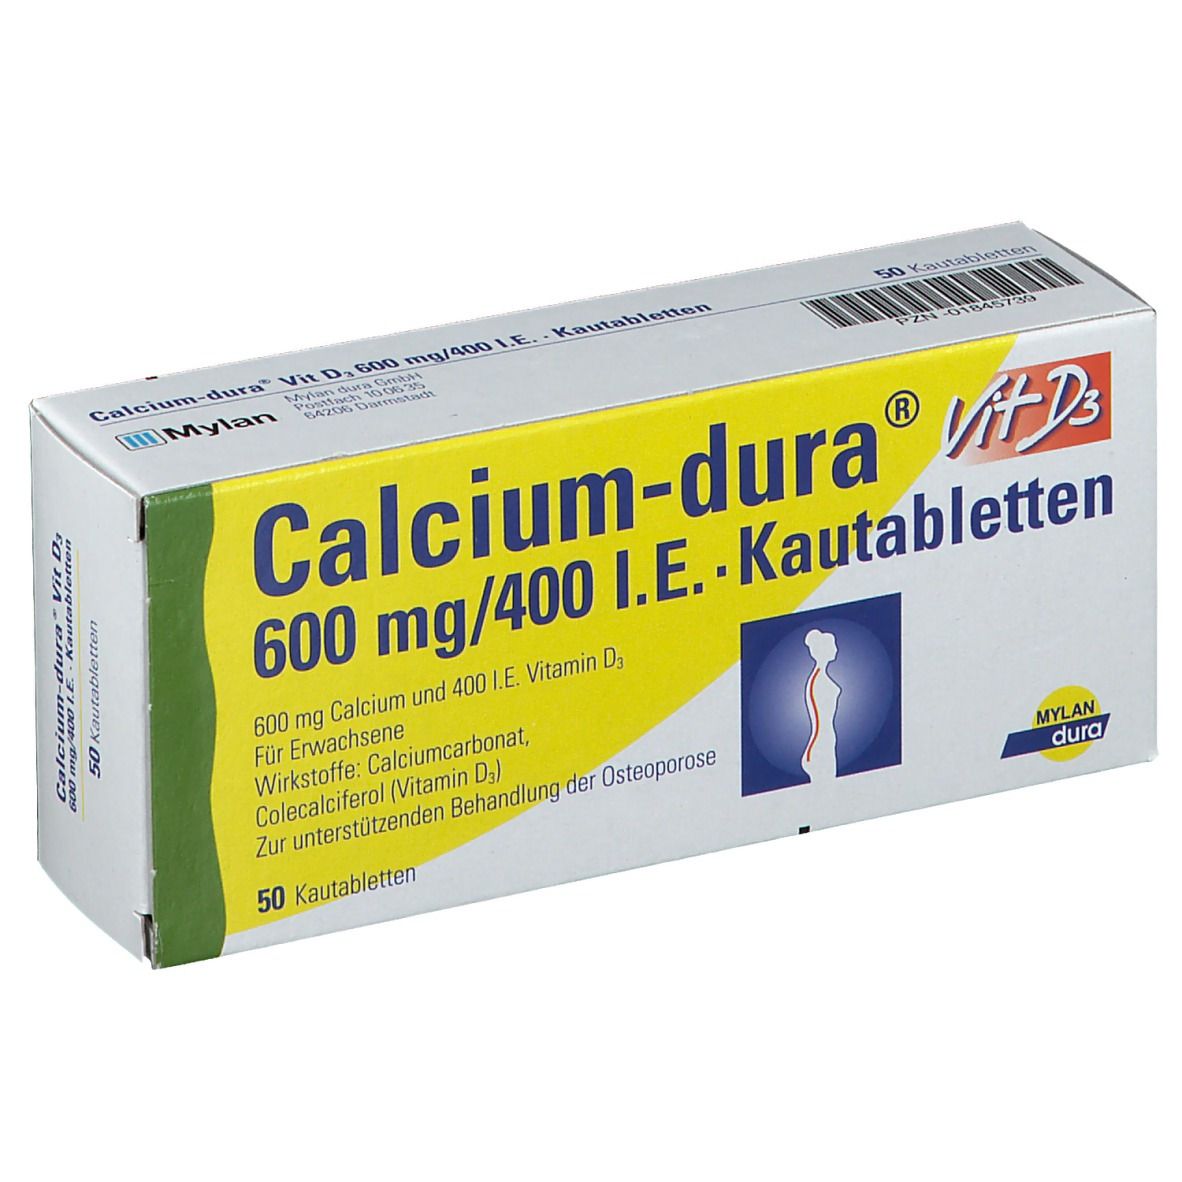 Calcium-dura® Vit D3 600 mg/400 I.E. Kautabletten